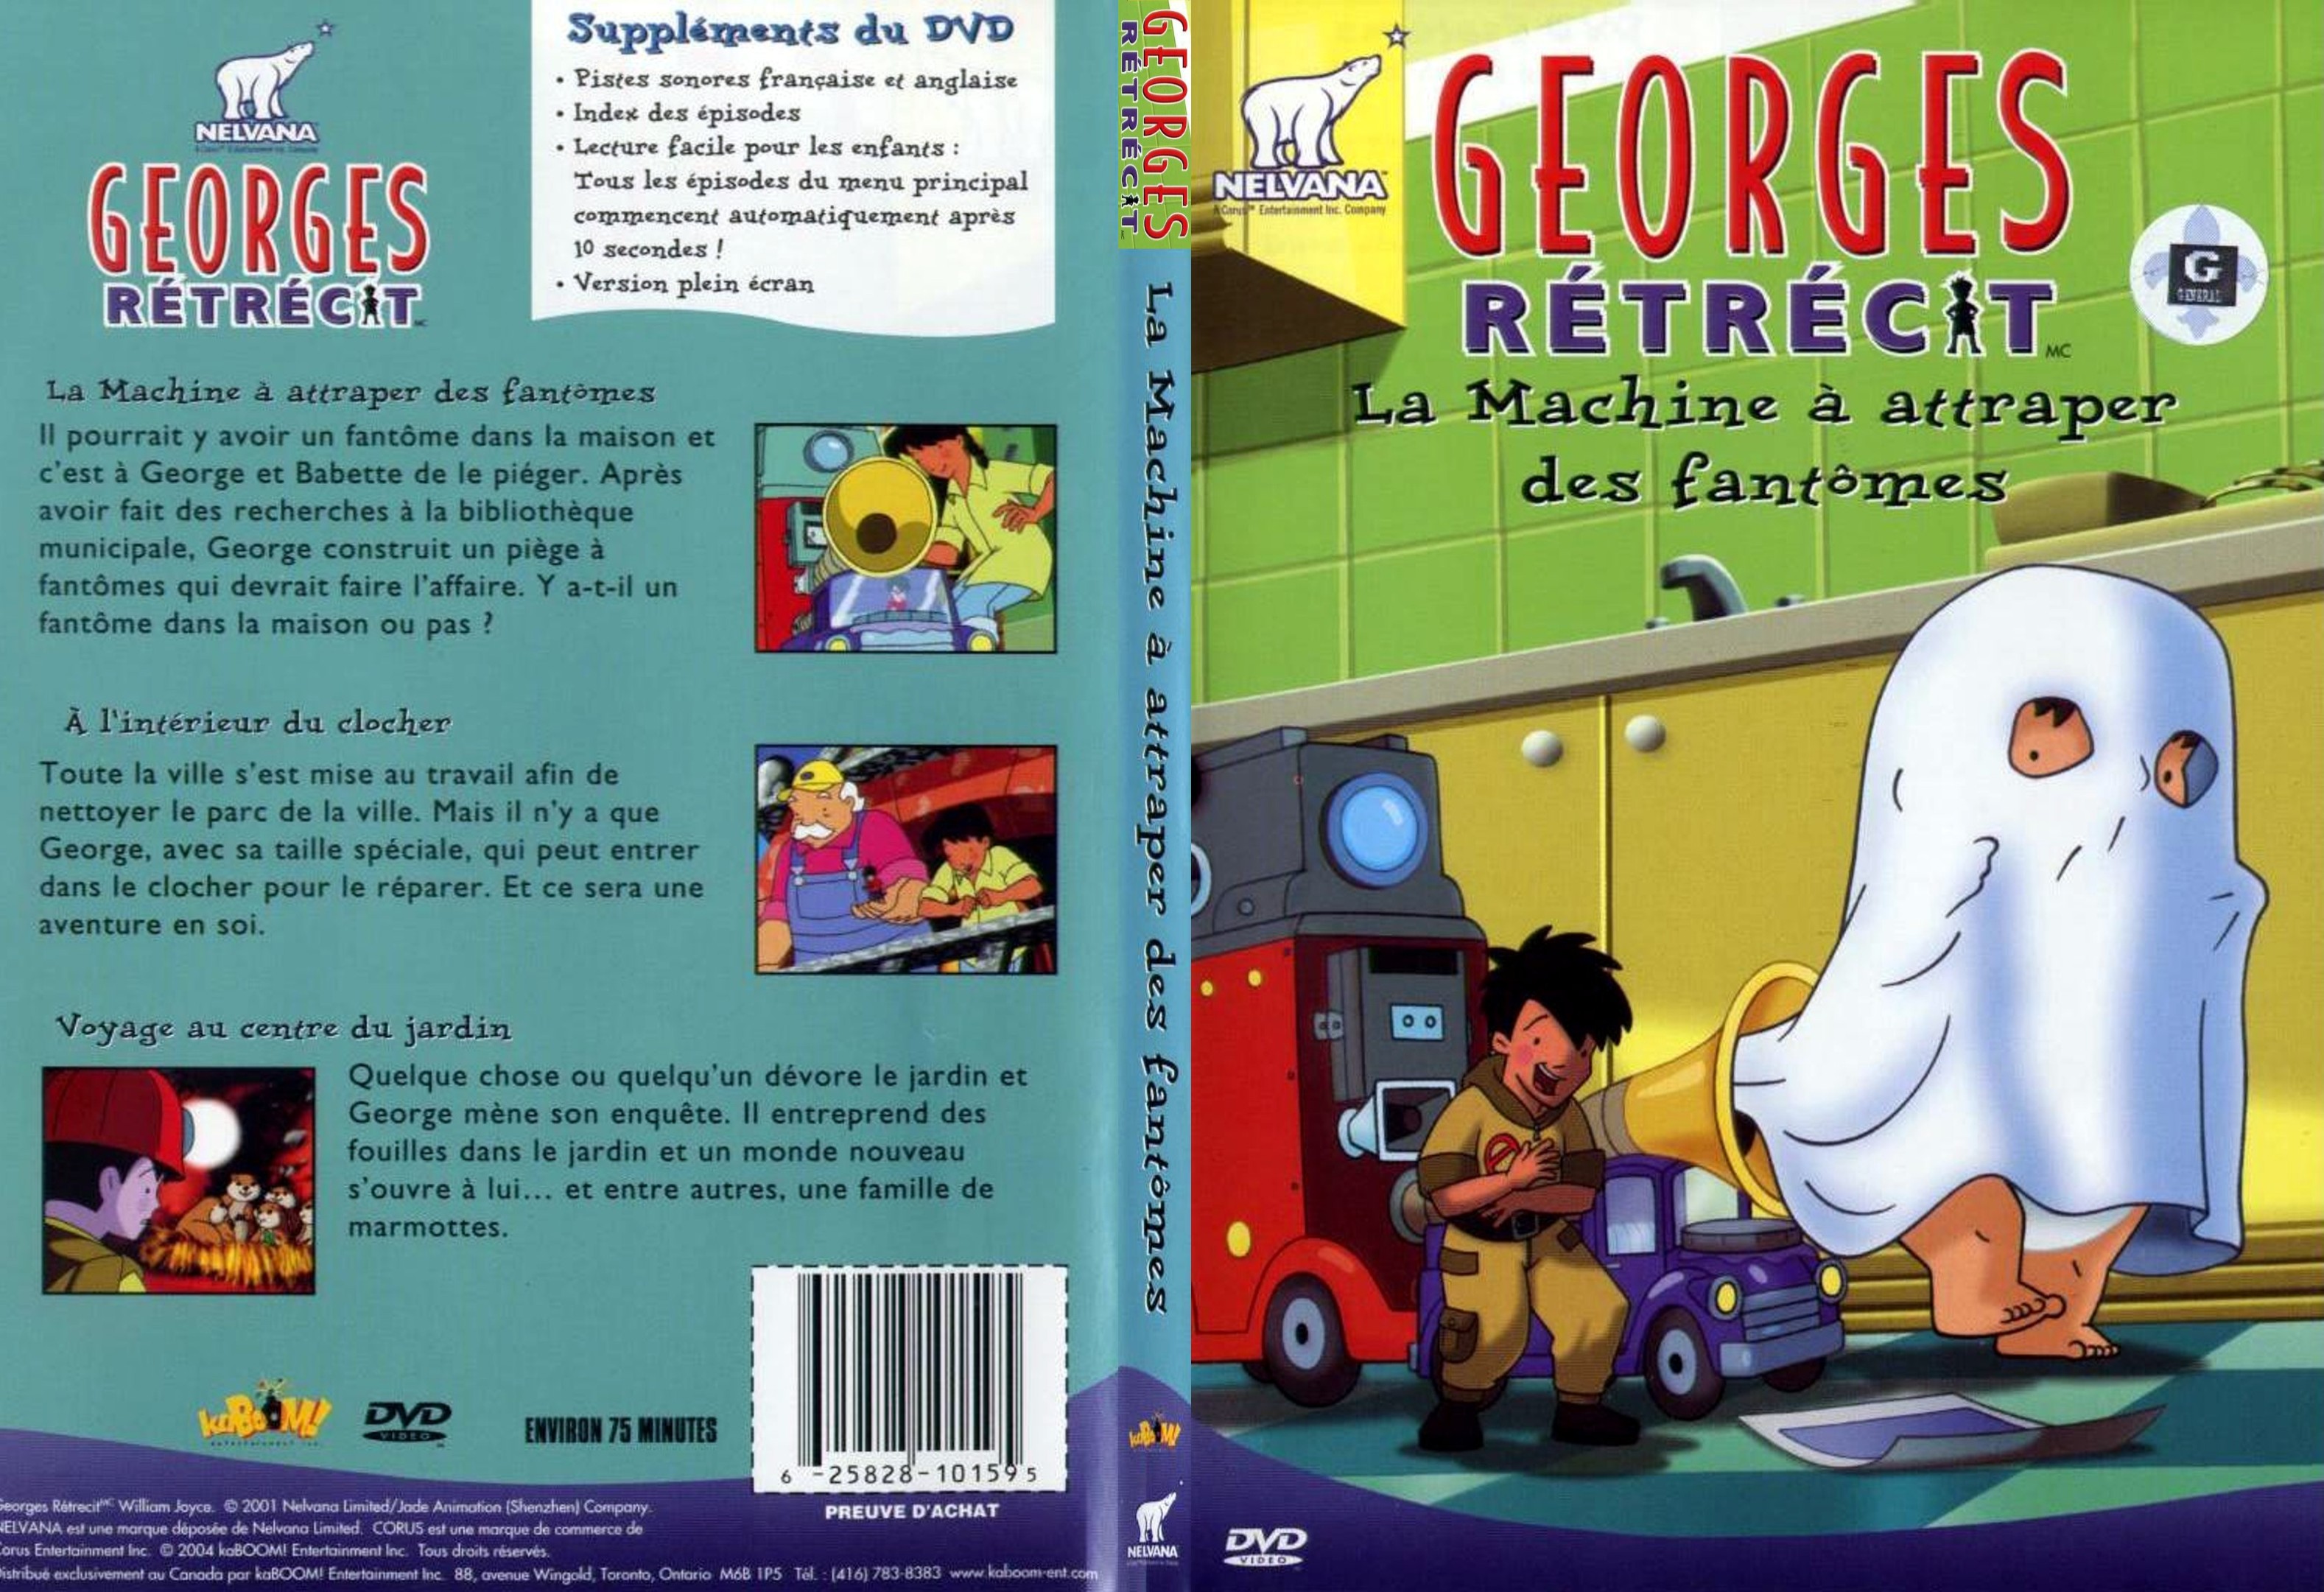 Jaquette DVD Georges Retrecit - La machine  attraper des fantmes - SLIM